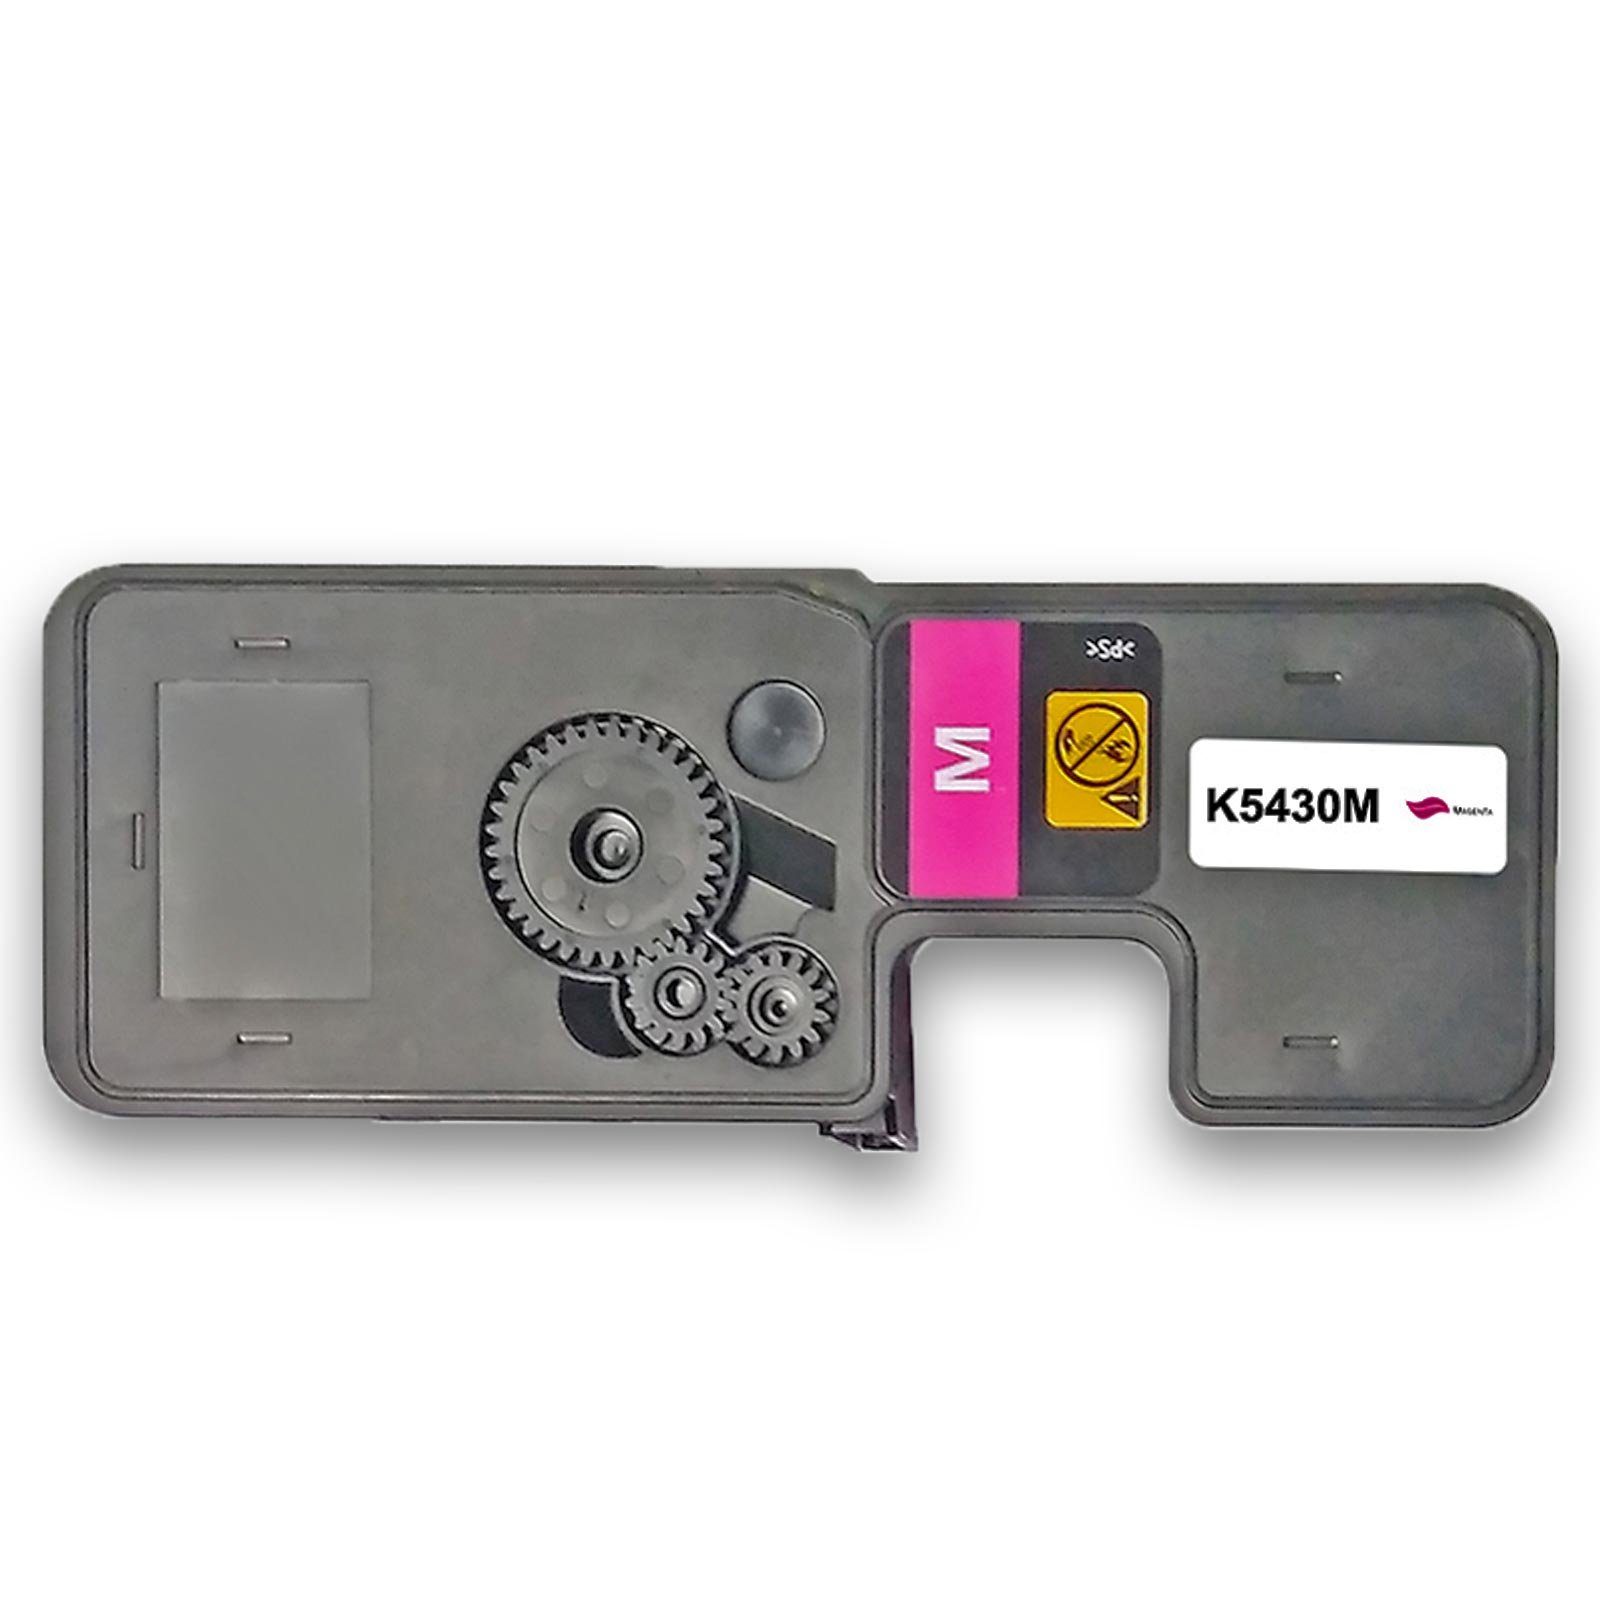 Gigao Tonerkartusche Kompatibel Kyocera TK-5430M Magenta, Lieferumfang: 1x Tonerkassette kompatibel zu Kyocera TK-5430M | Tonerpatronen